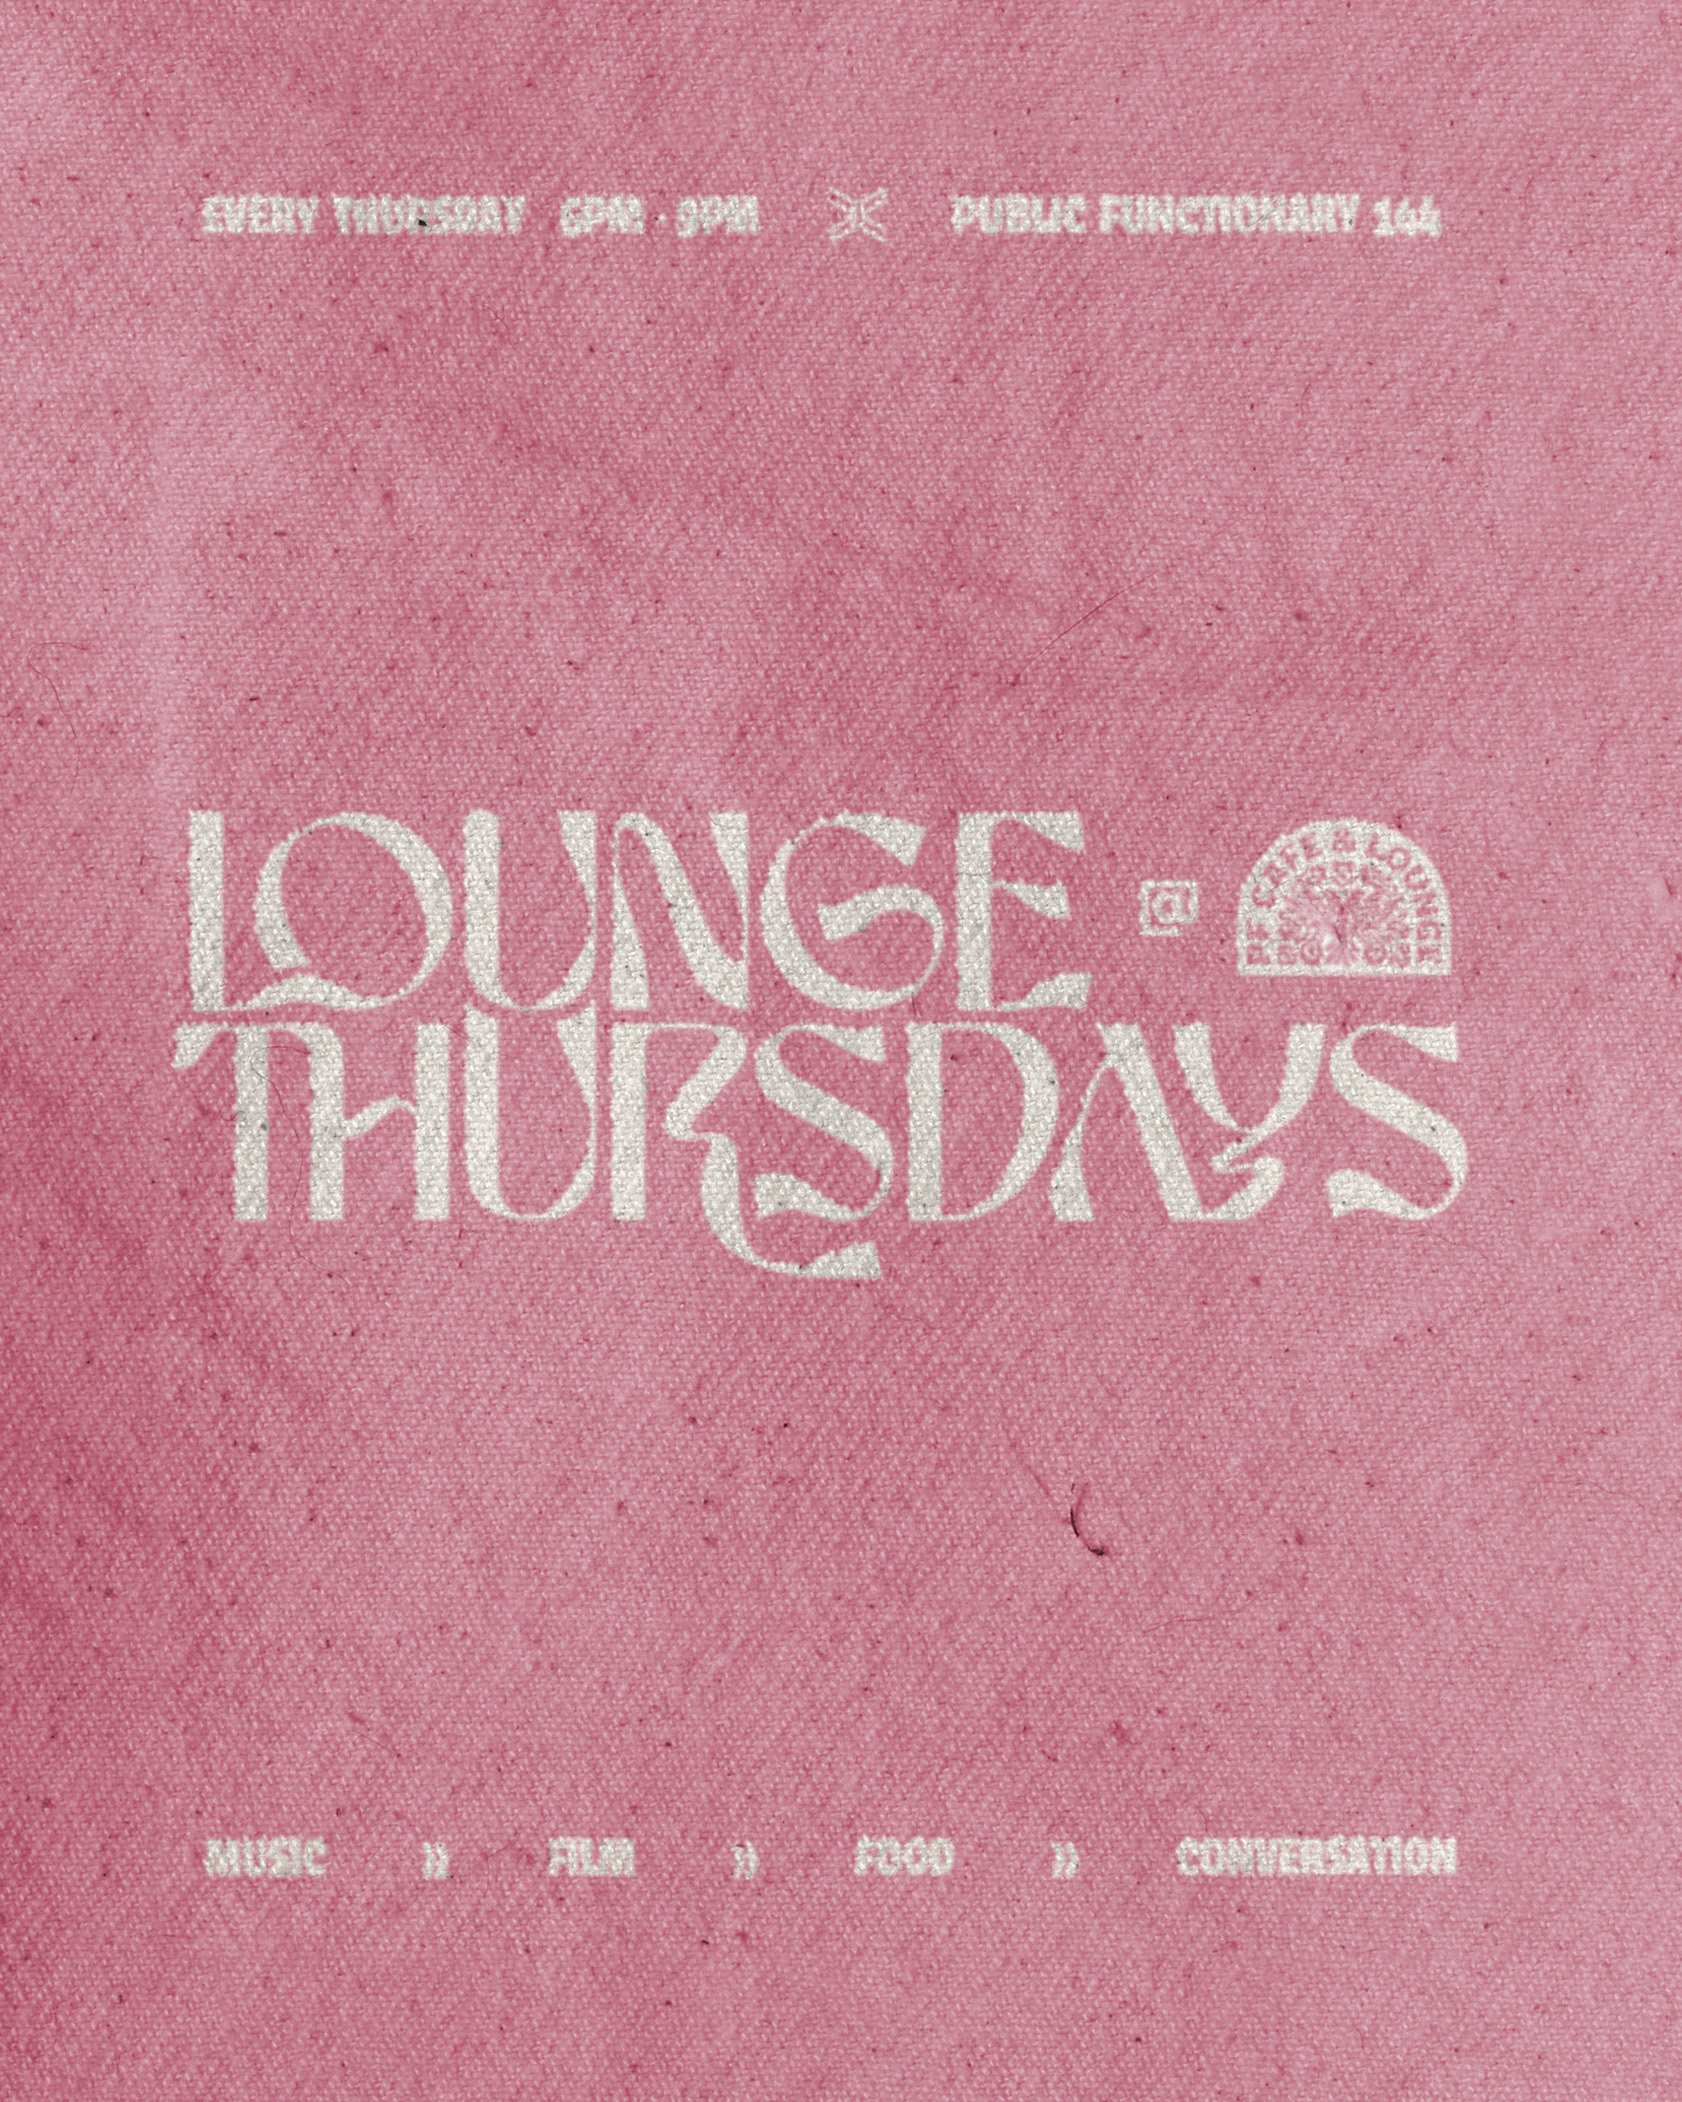 1.May Lounge Thursdays.jpg